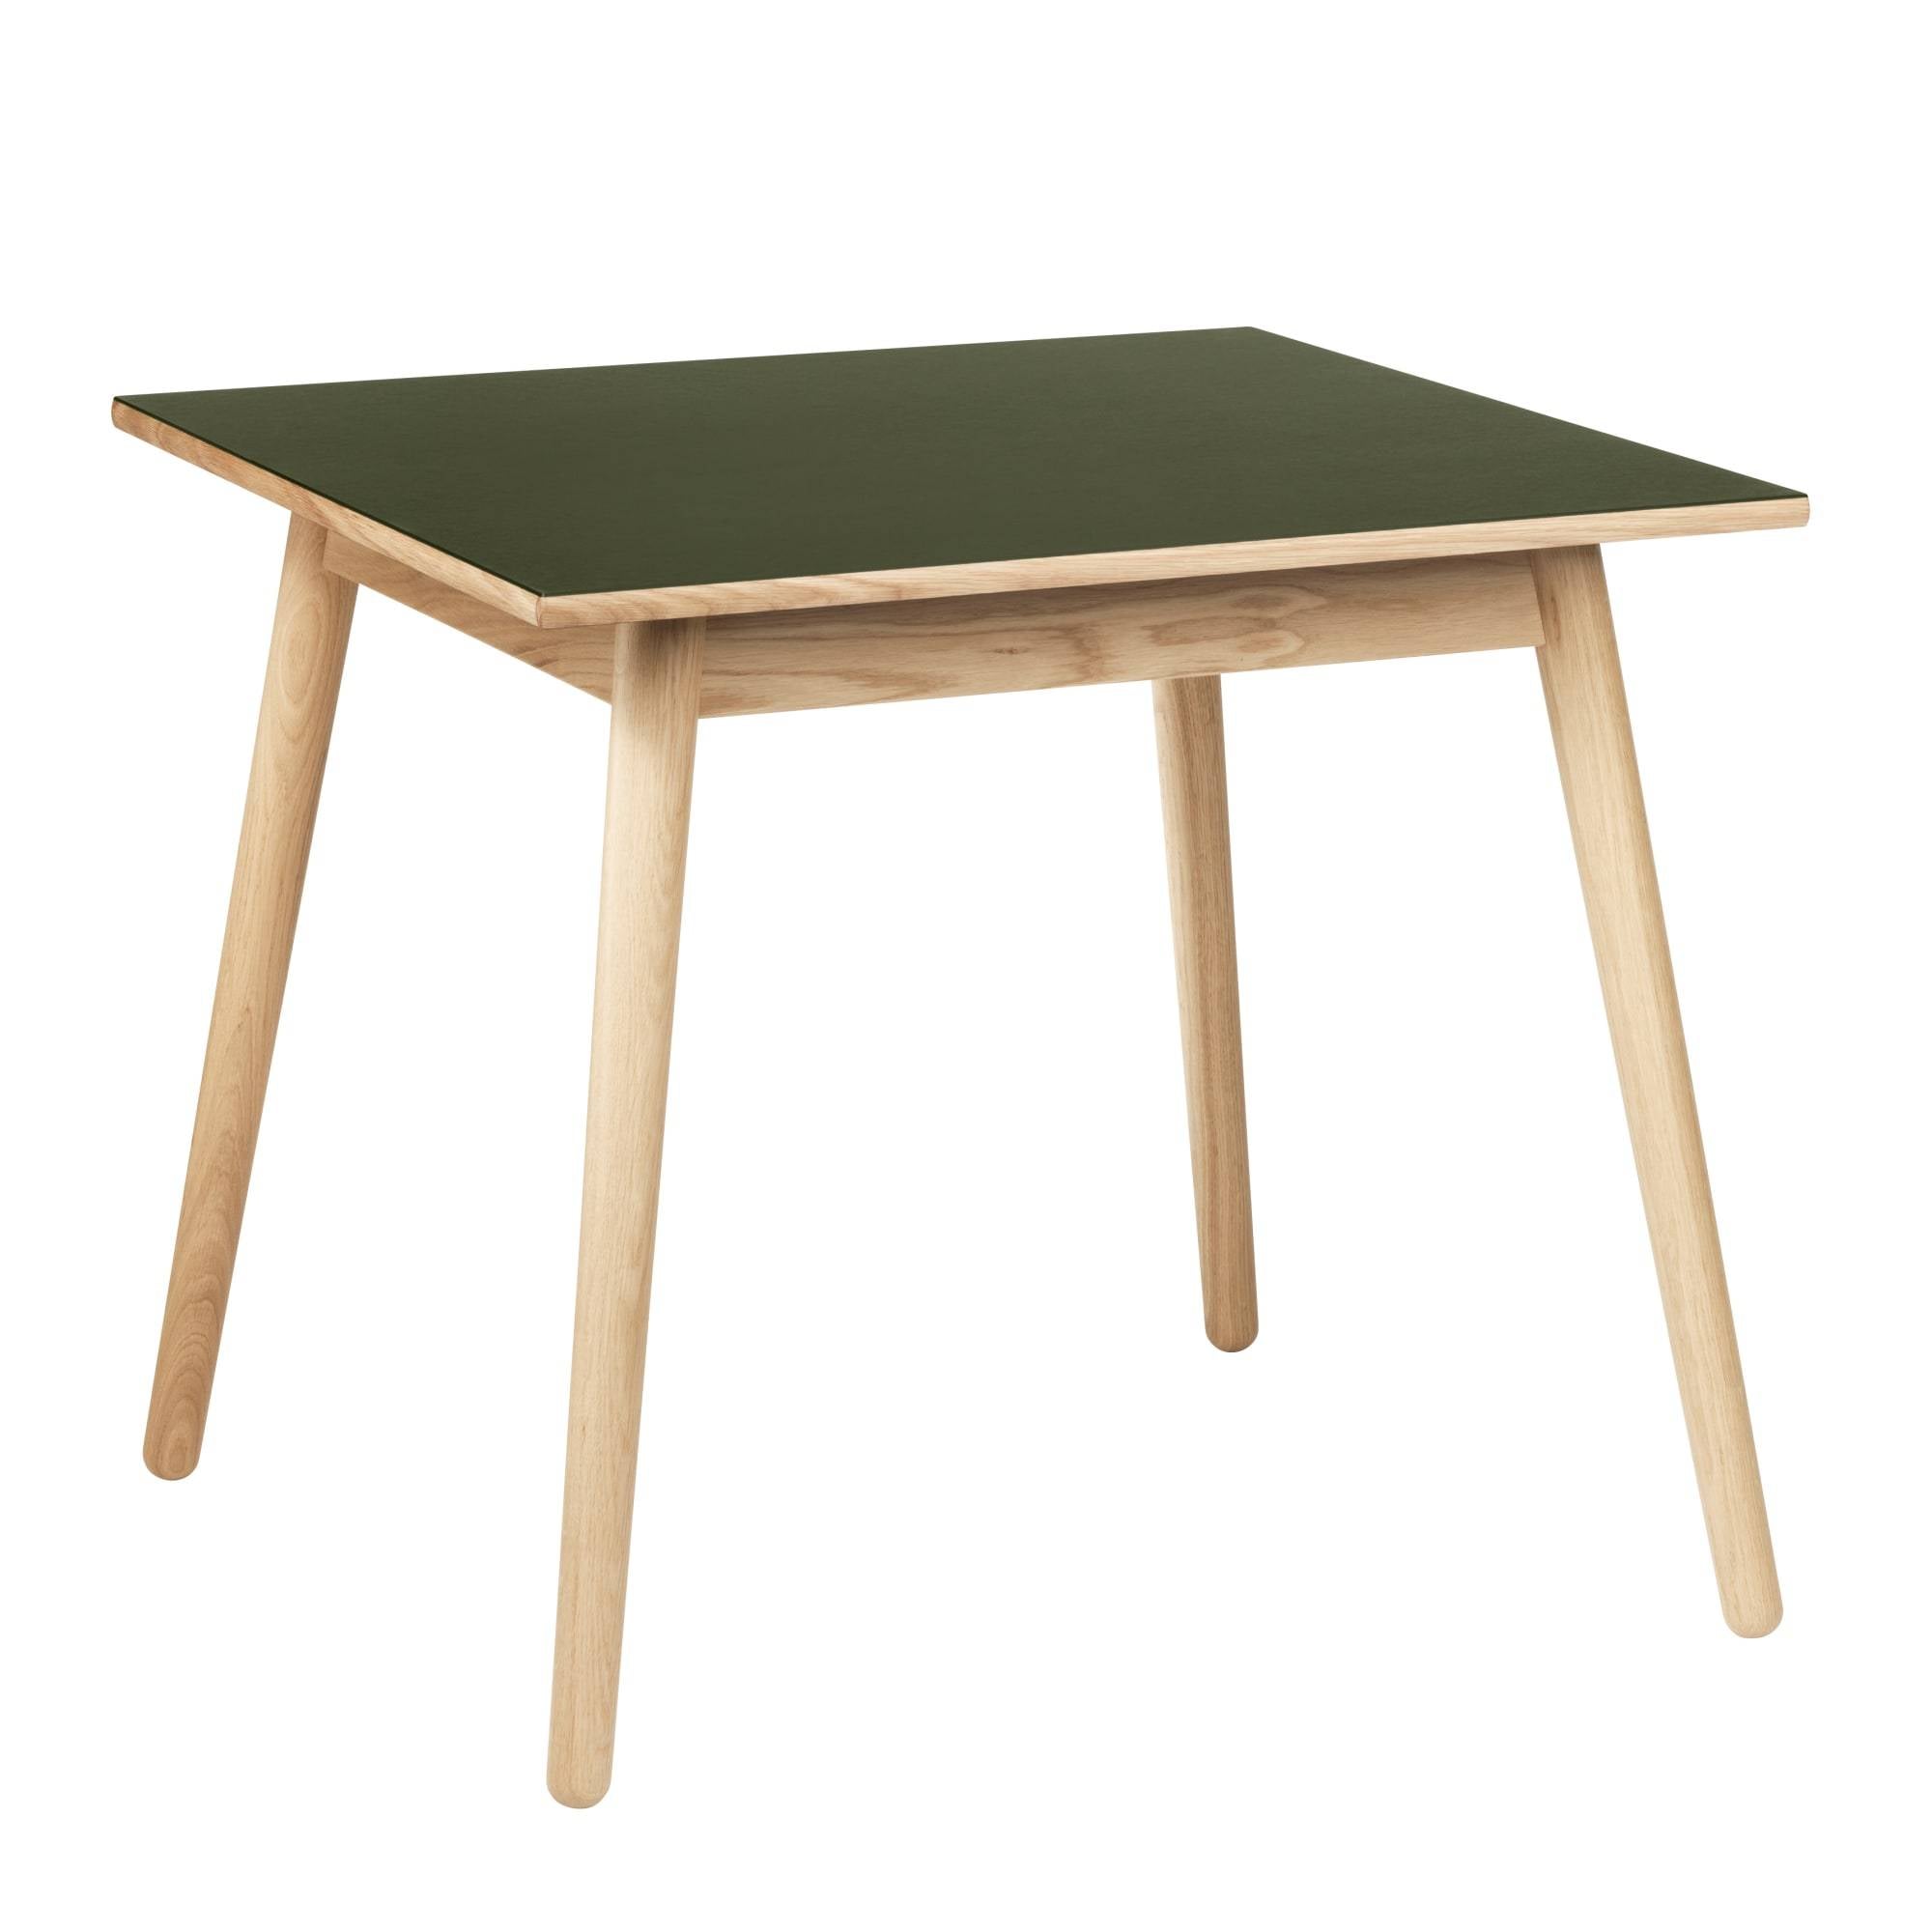 Fdb Møbler C35 Dining Table Oak, Olive Linoleum Table Top, 82x82cm